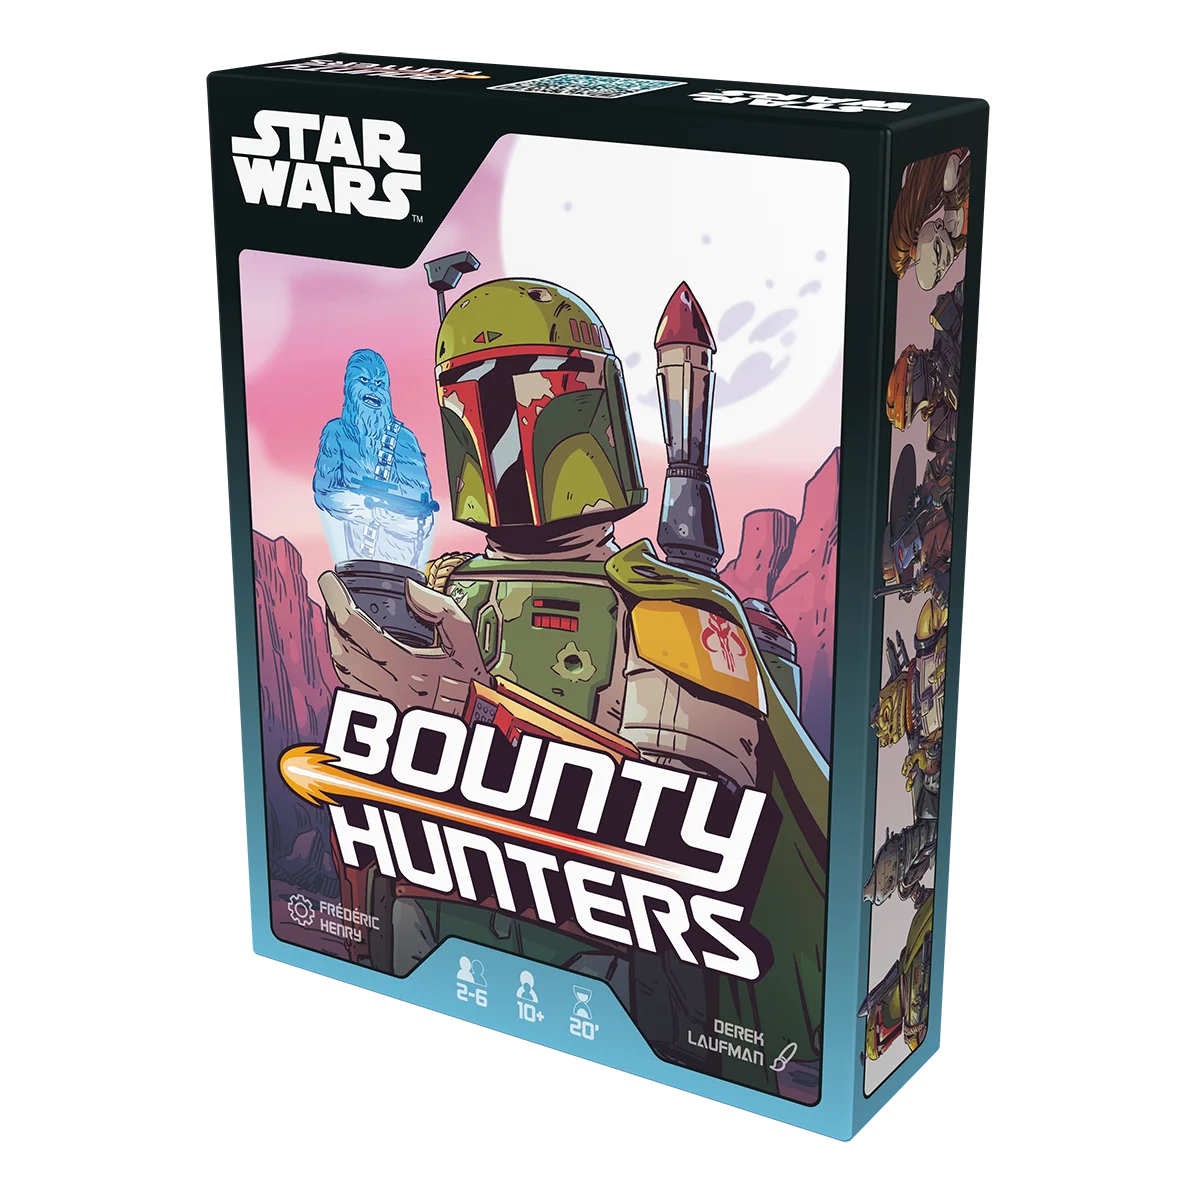 Preorder - Star Wars: Bounty Hunters